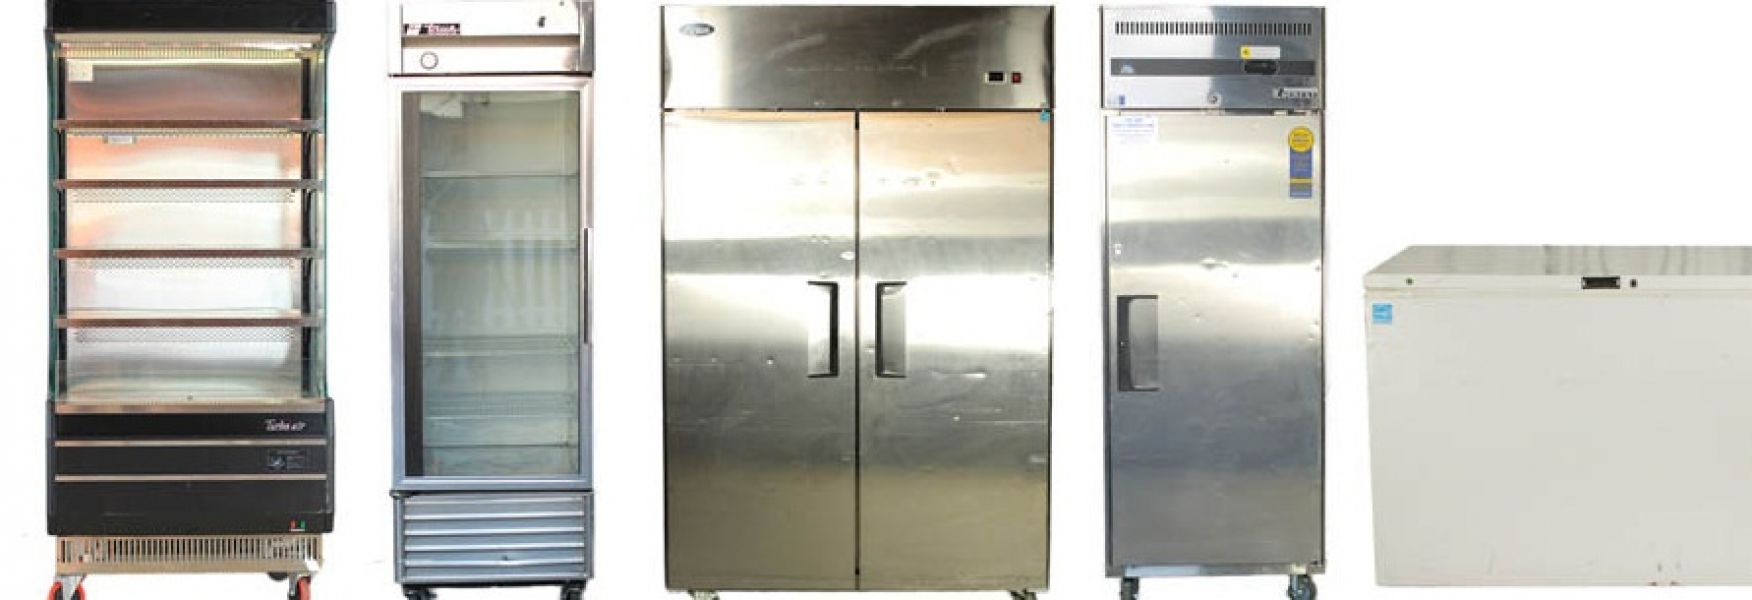 07801295368 Industrial Frigidaire Refrigerator Installers In Hampshire,Basingstoke